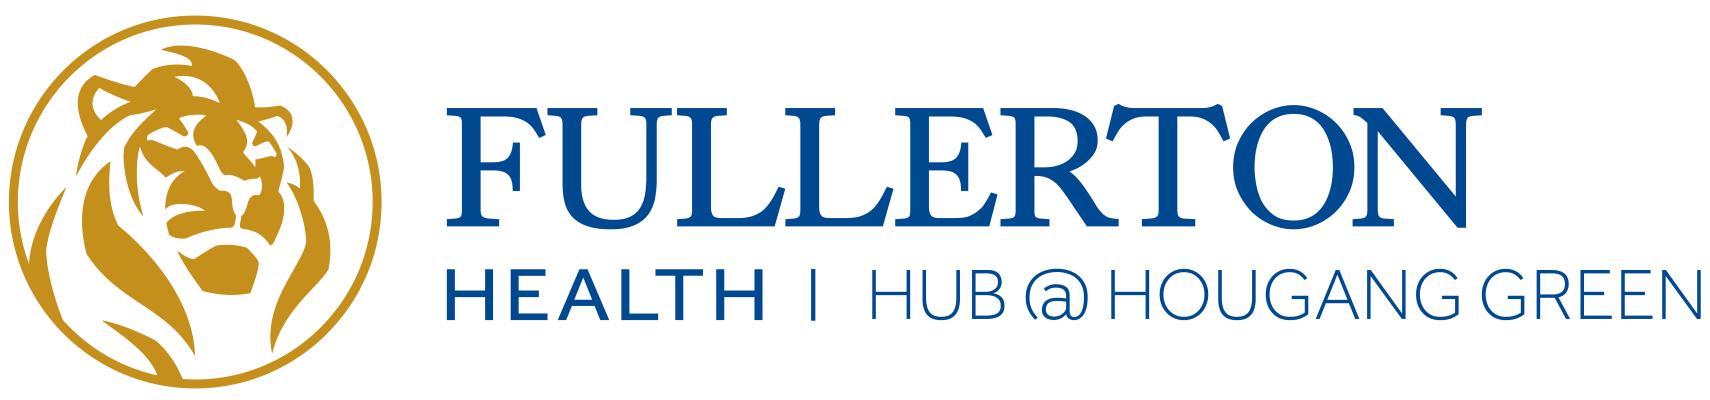 Fullerton-Health-Hub-Logo-@Hougang-Green-1-2048x10